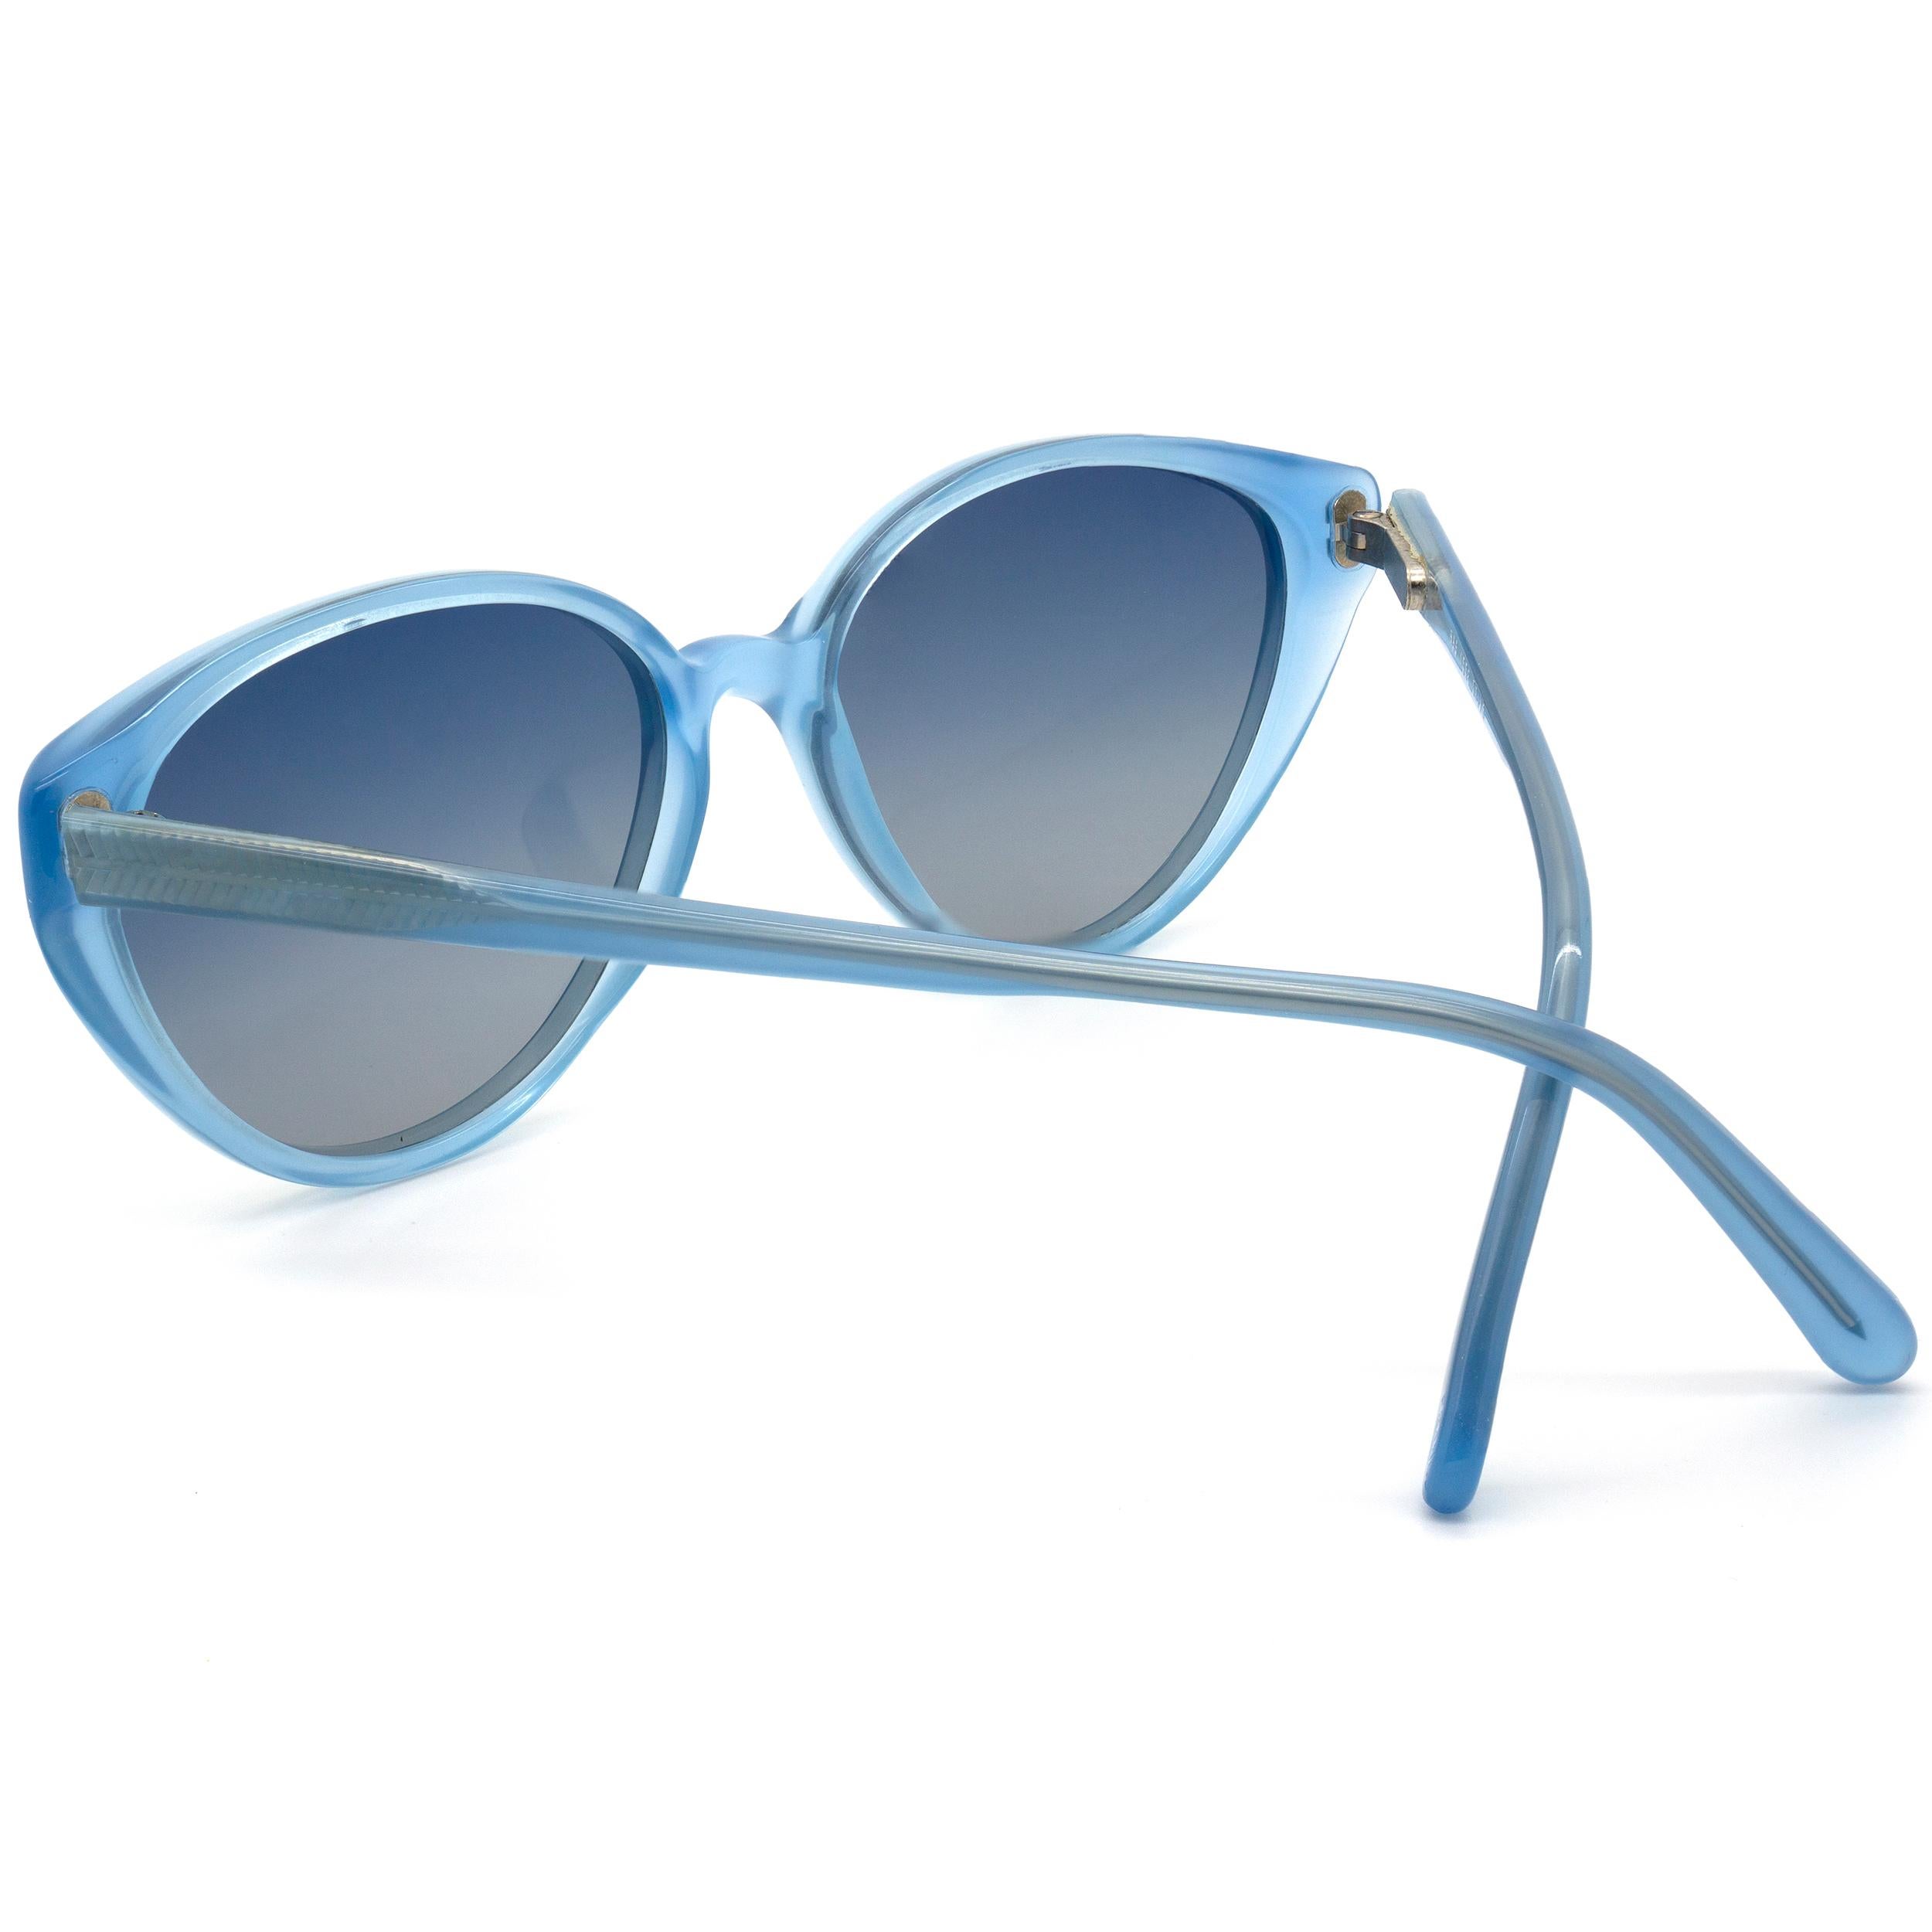 Blue France vintage cat eye sunglasses by Argos For Sale